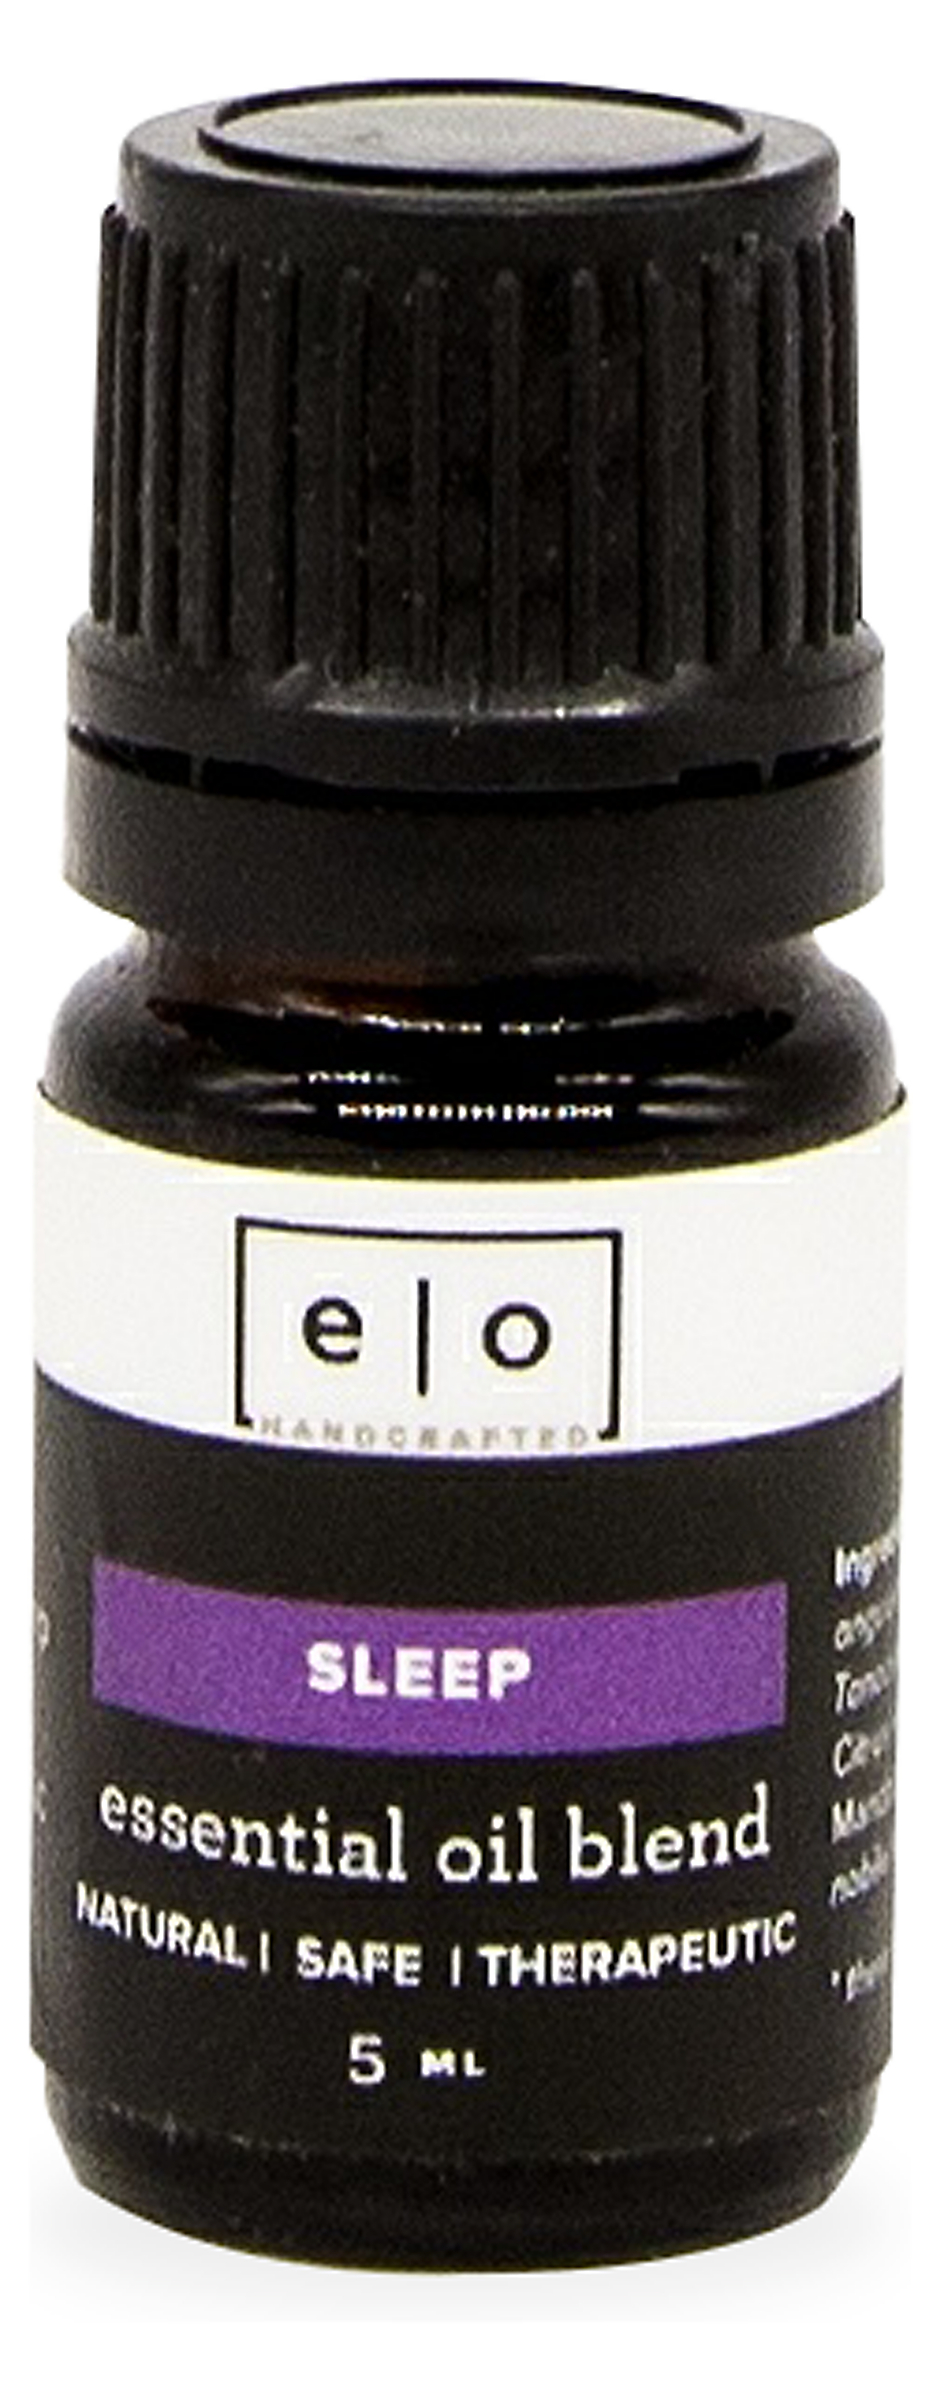 Essence One - 5ml Essential Oil in Sleep